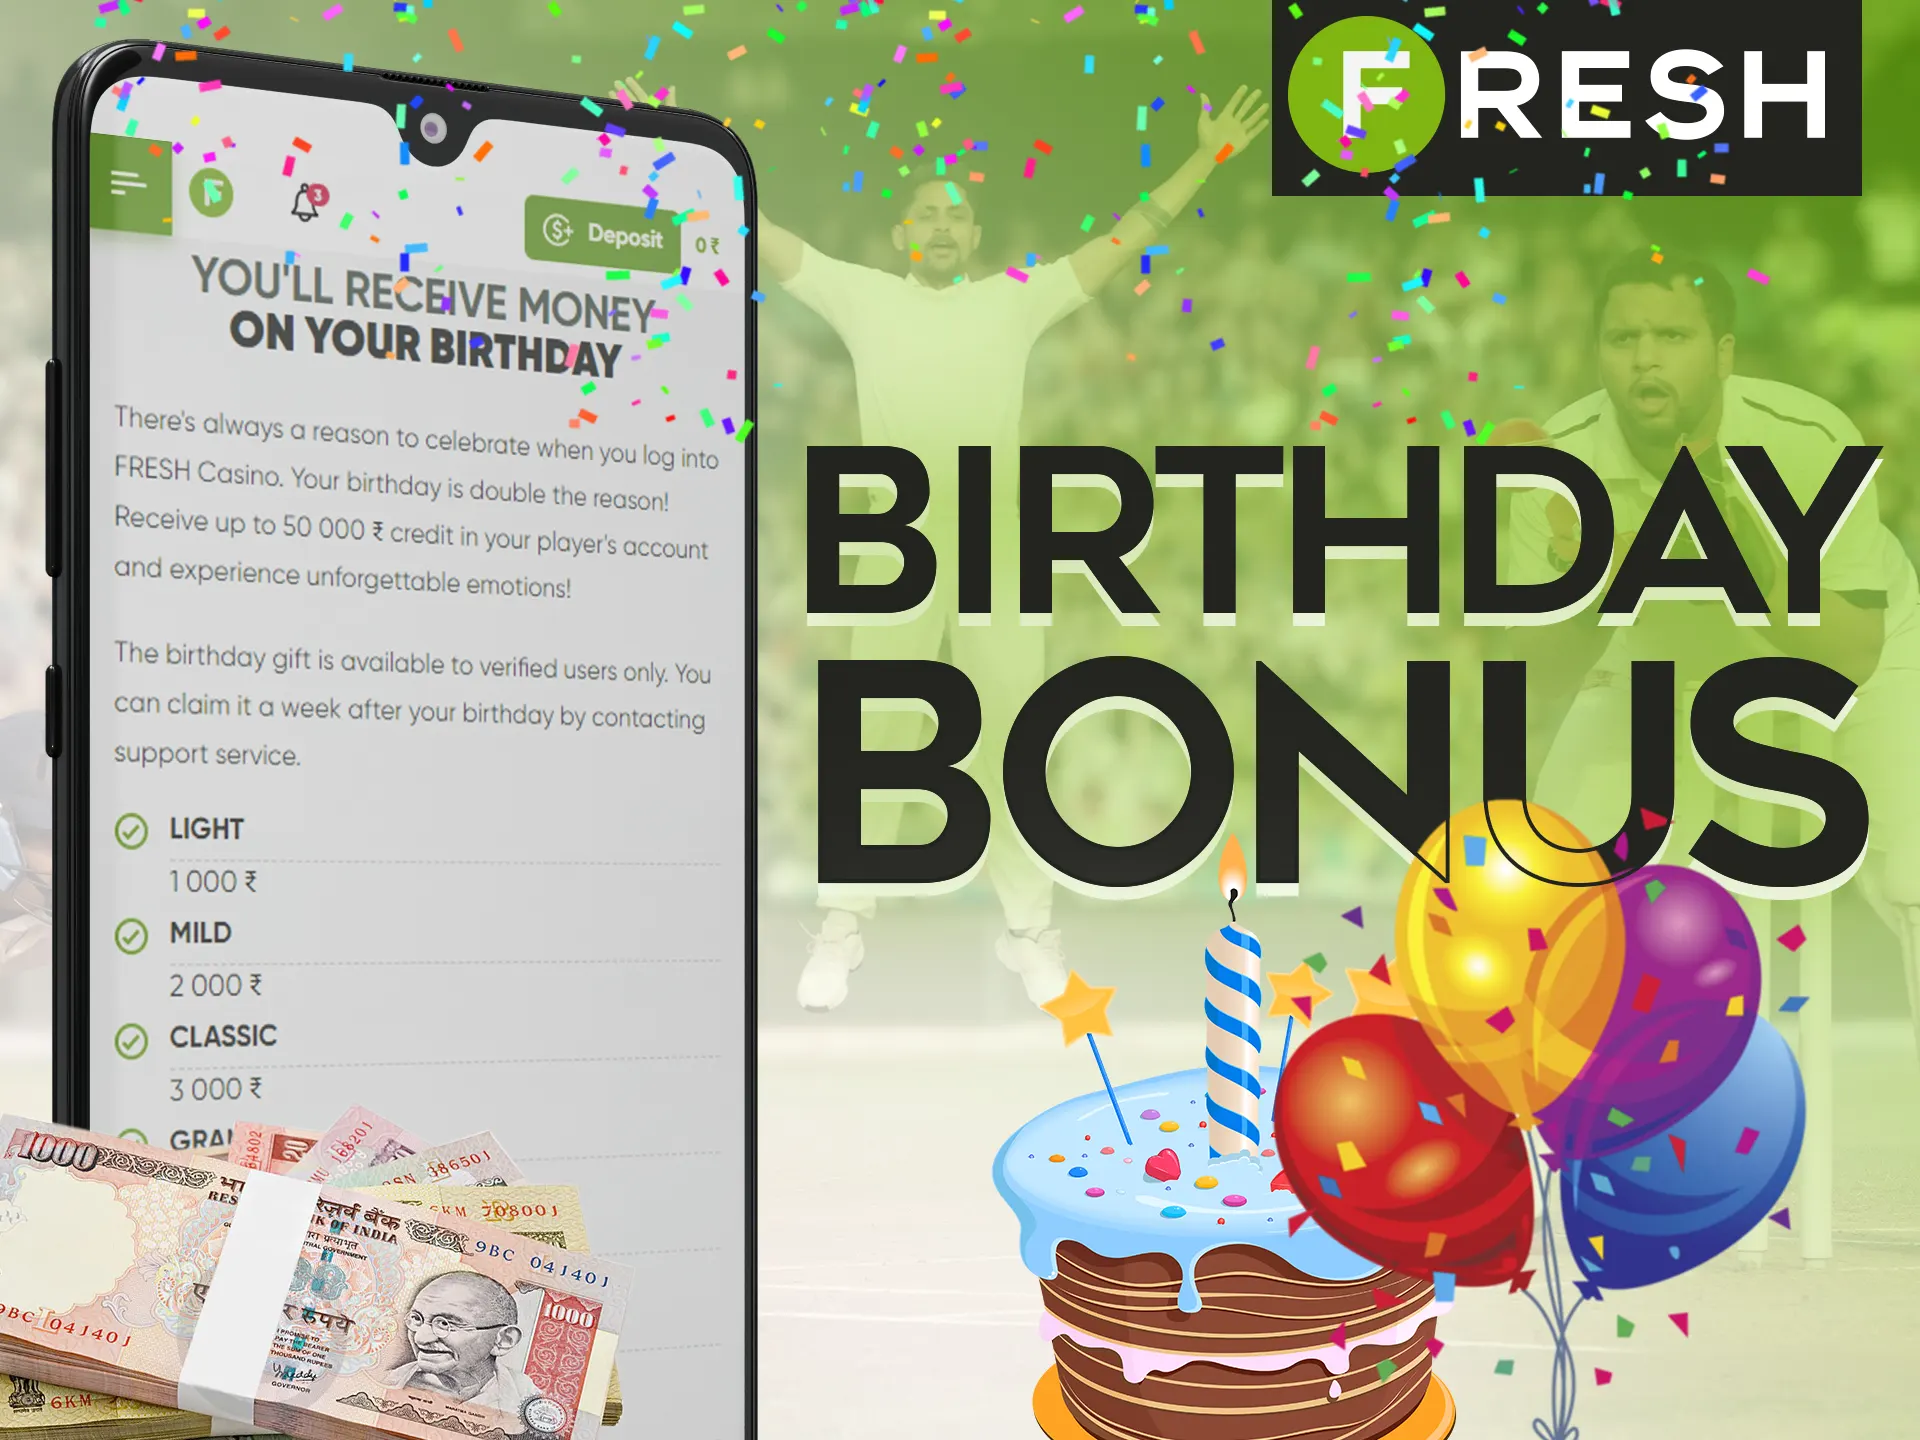 Get your birthday bonus and celebrate with Fresh Casino.